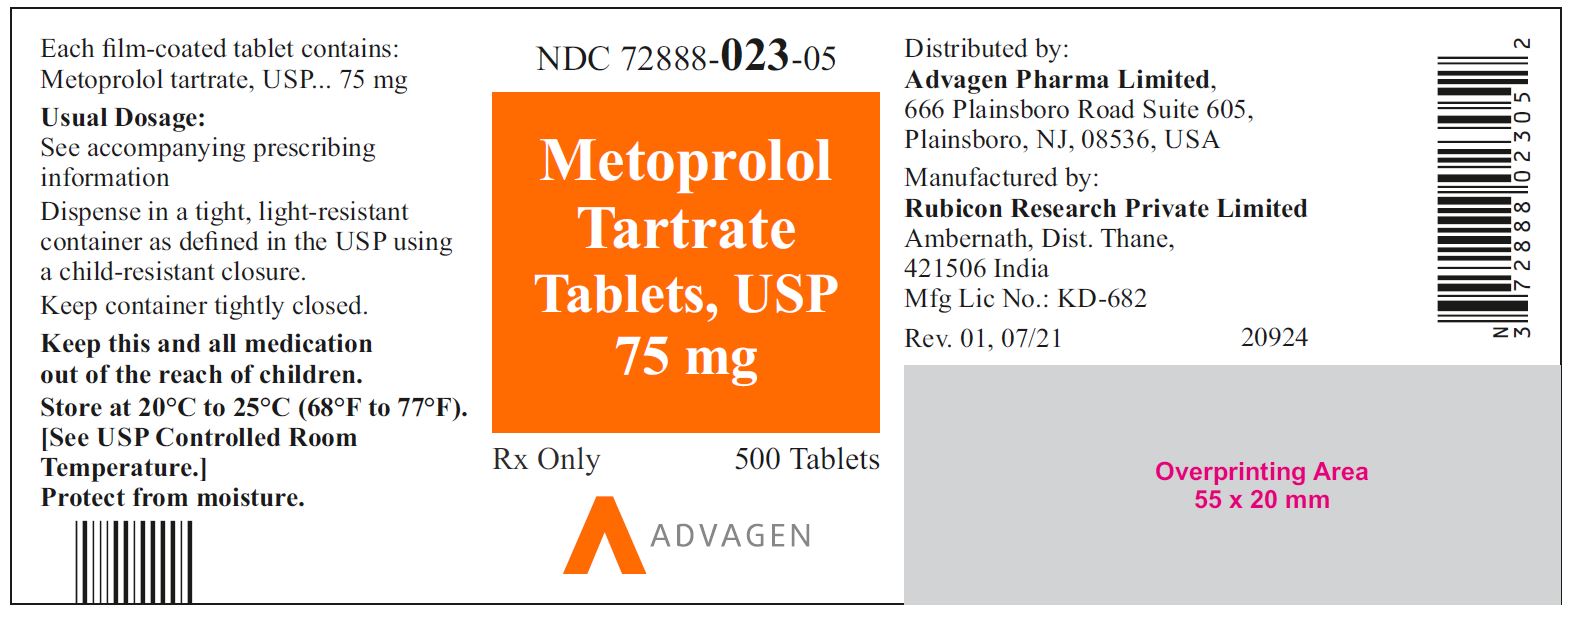 NDC: <a href=/NDC/72888-023-05>72888-023-05</a> - Metoprolol Tartrate Tablets, USP 75 mg - 500 Tablets